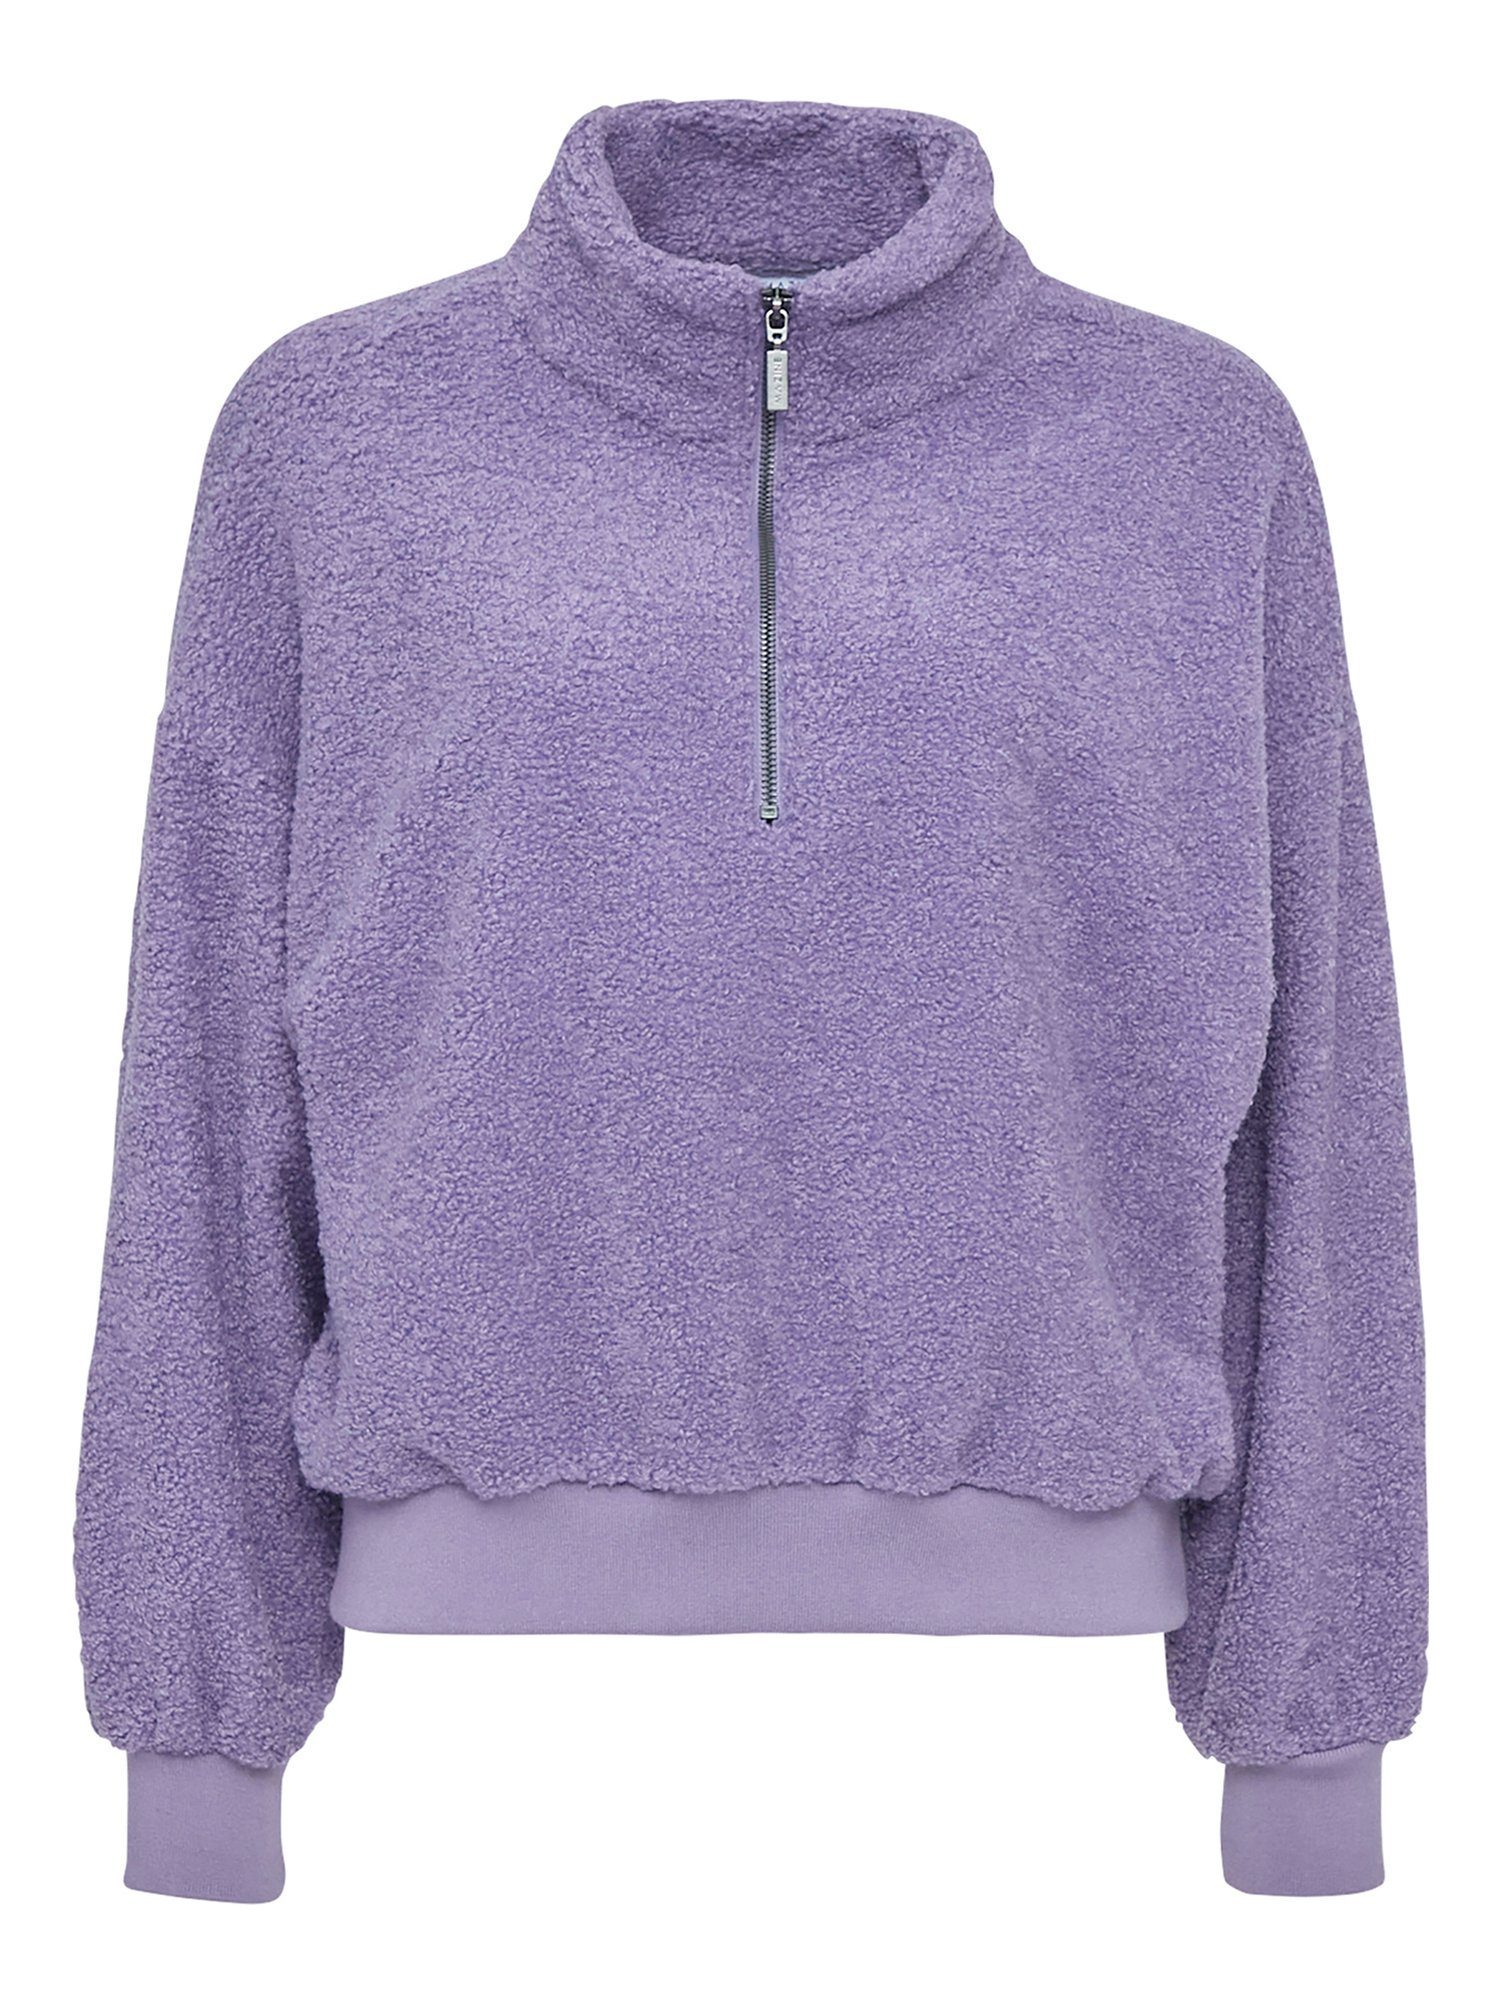 MAZINE Sweatshirt Ajo Half Zip sportlich gemütlich purple haze